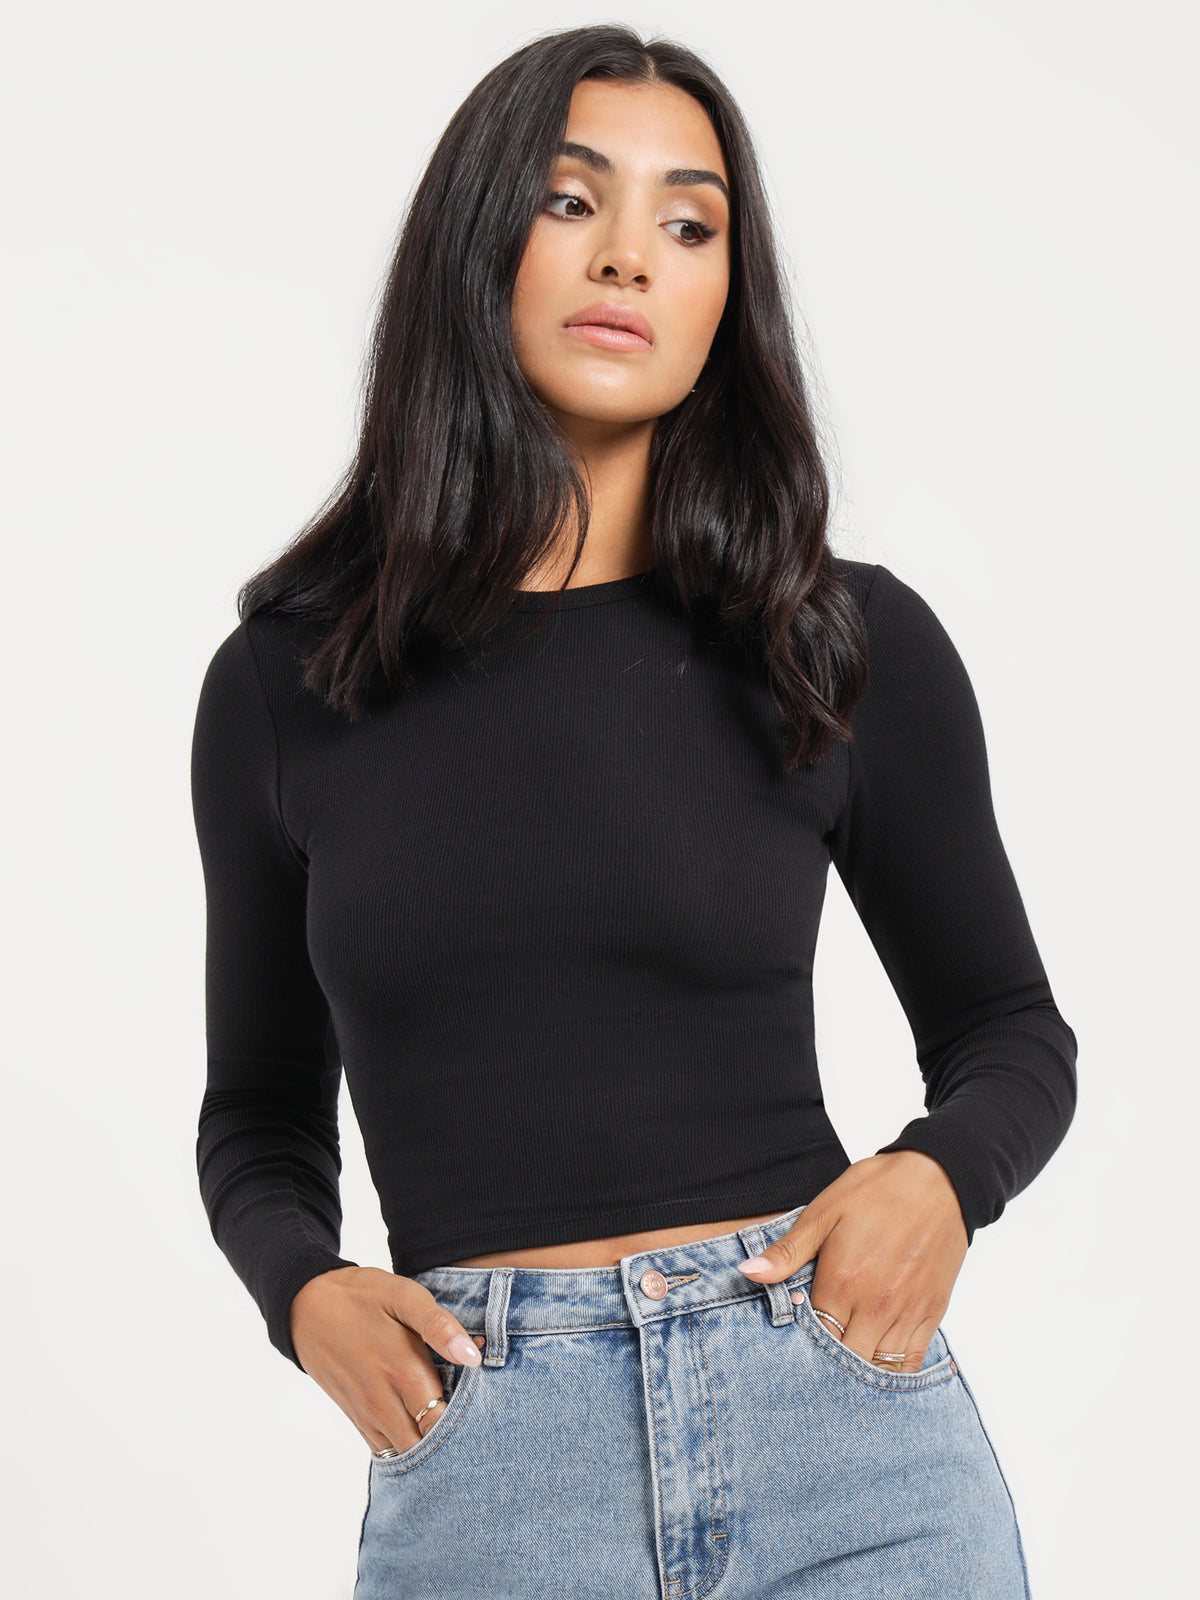 Greta Long Sleeve T-Shirt in Black